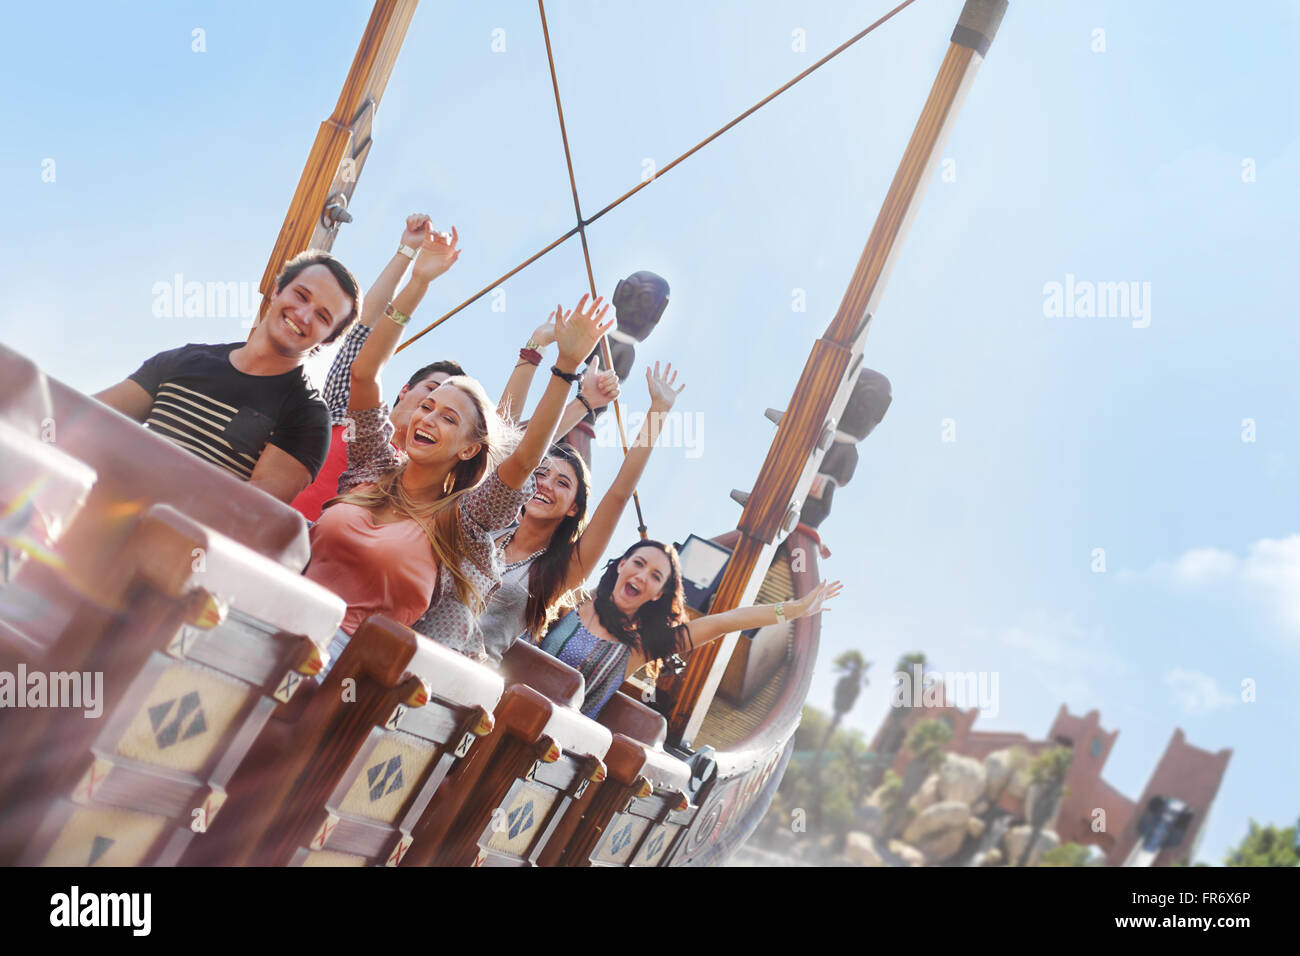 Friends cheering on amusement park ride Stock Photo